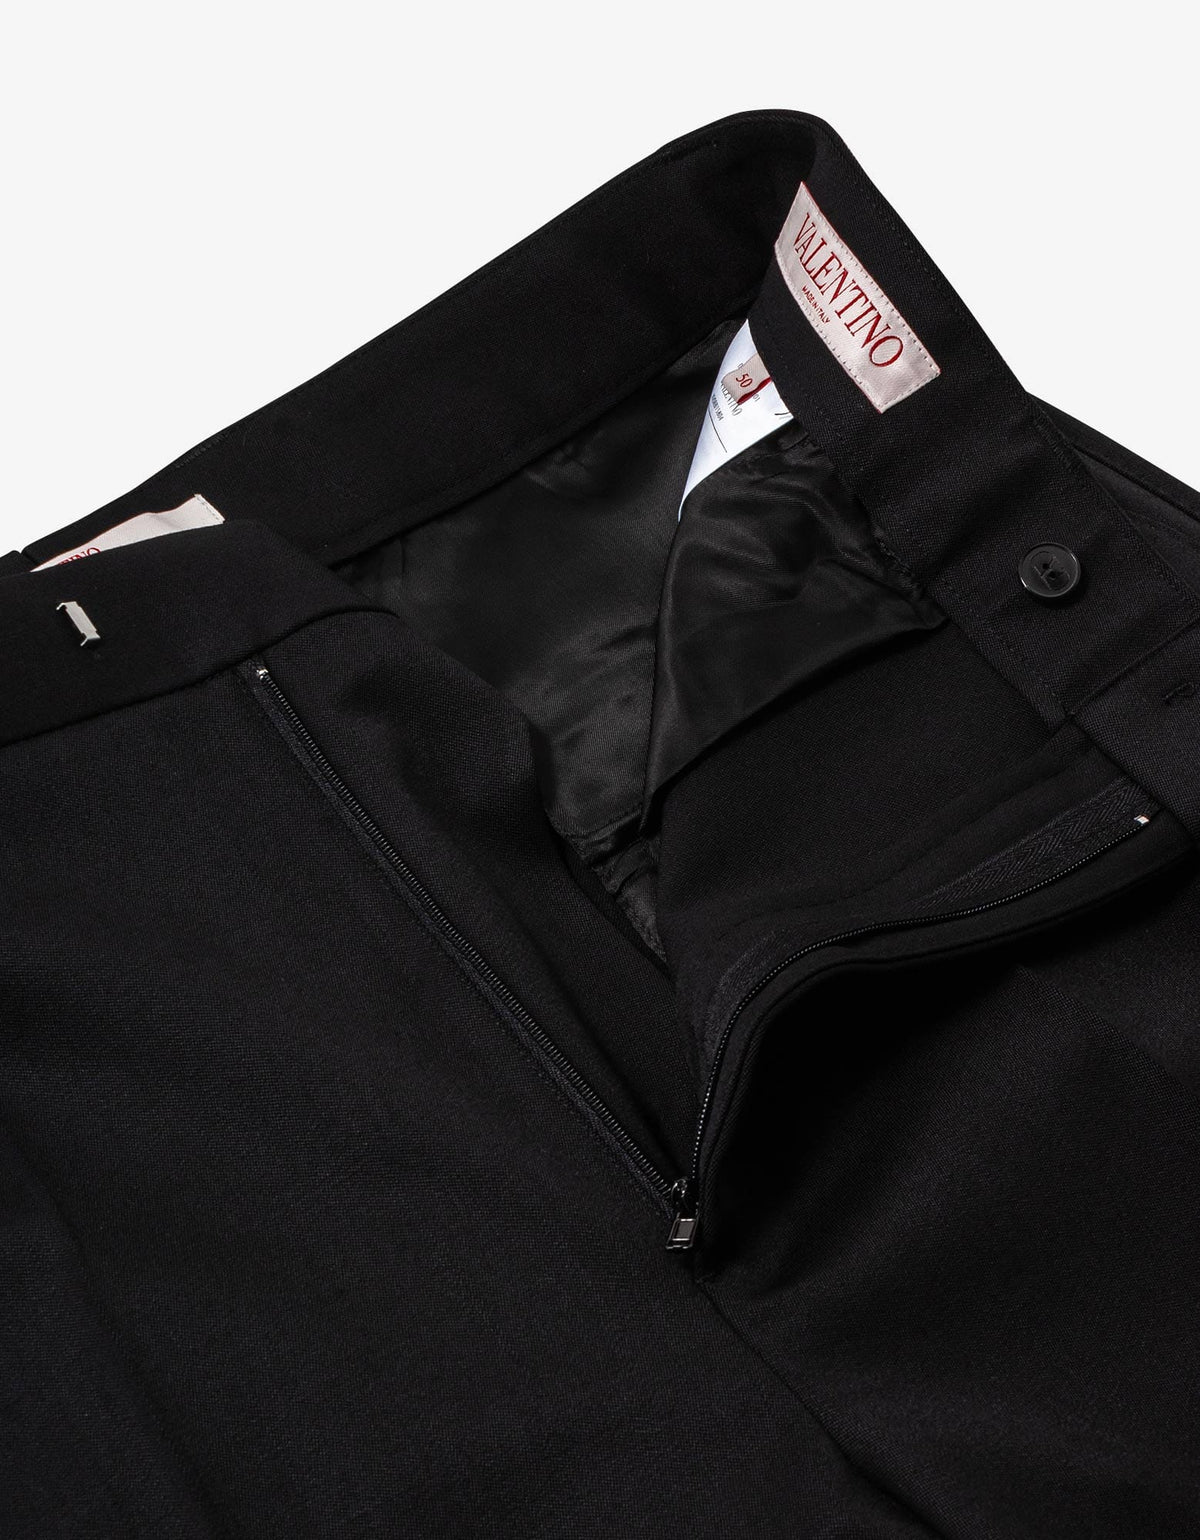 Valentino Black Wool Trouser